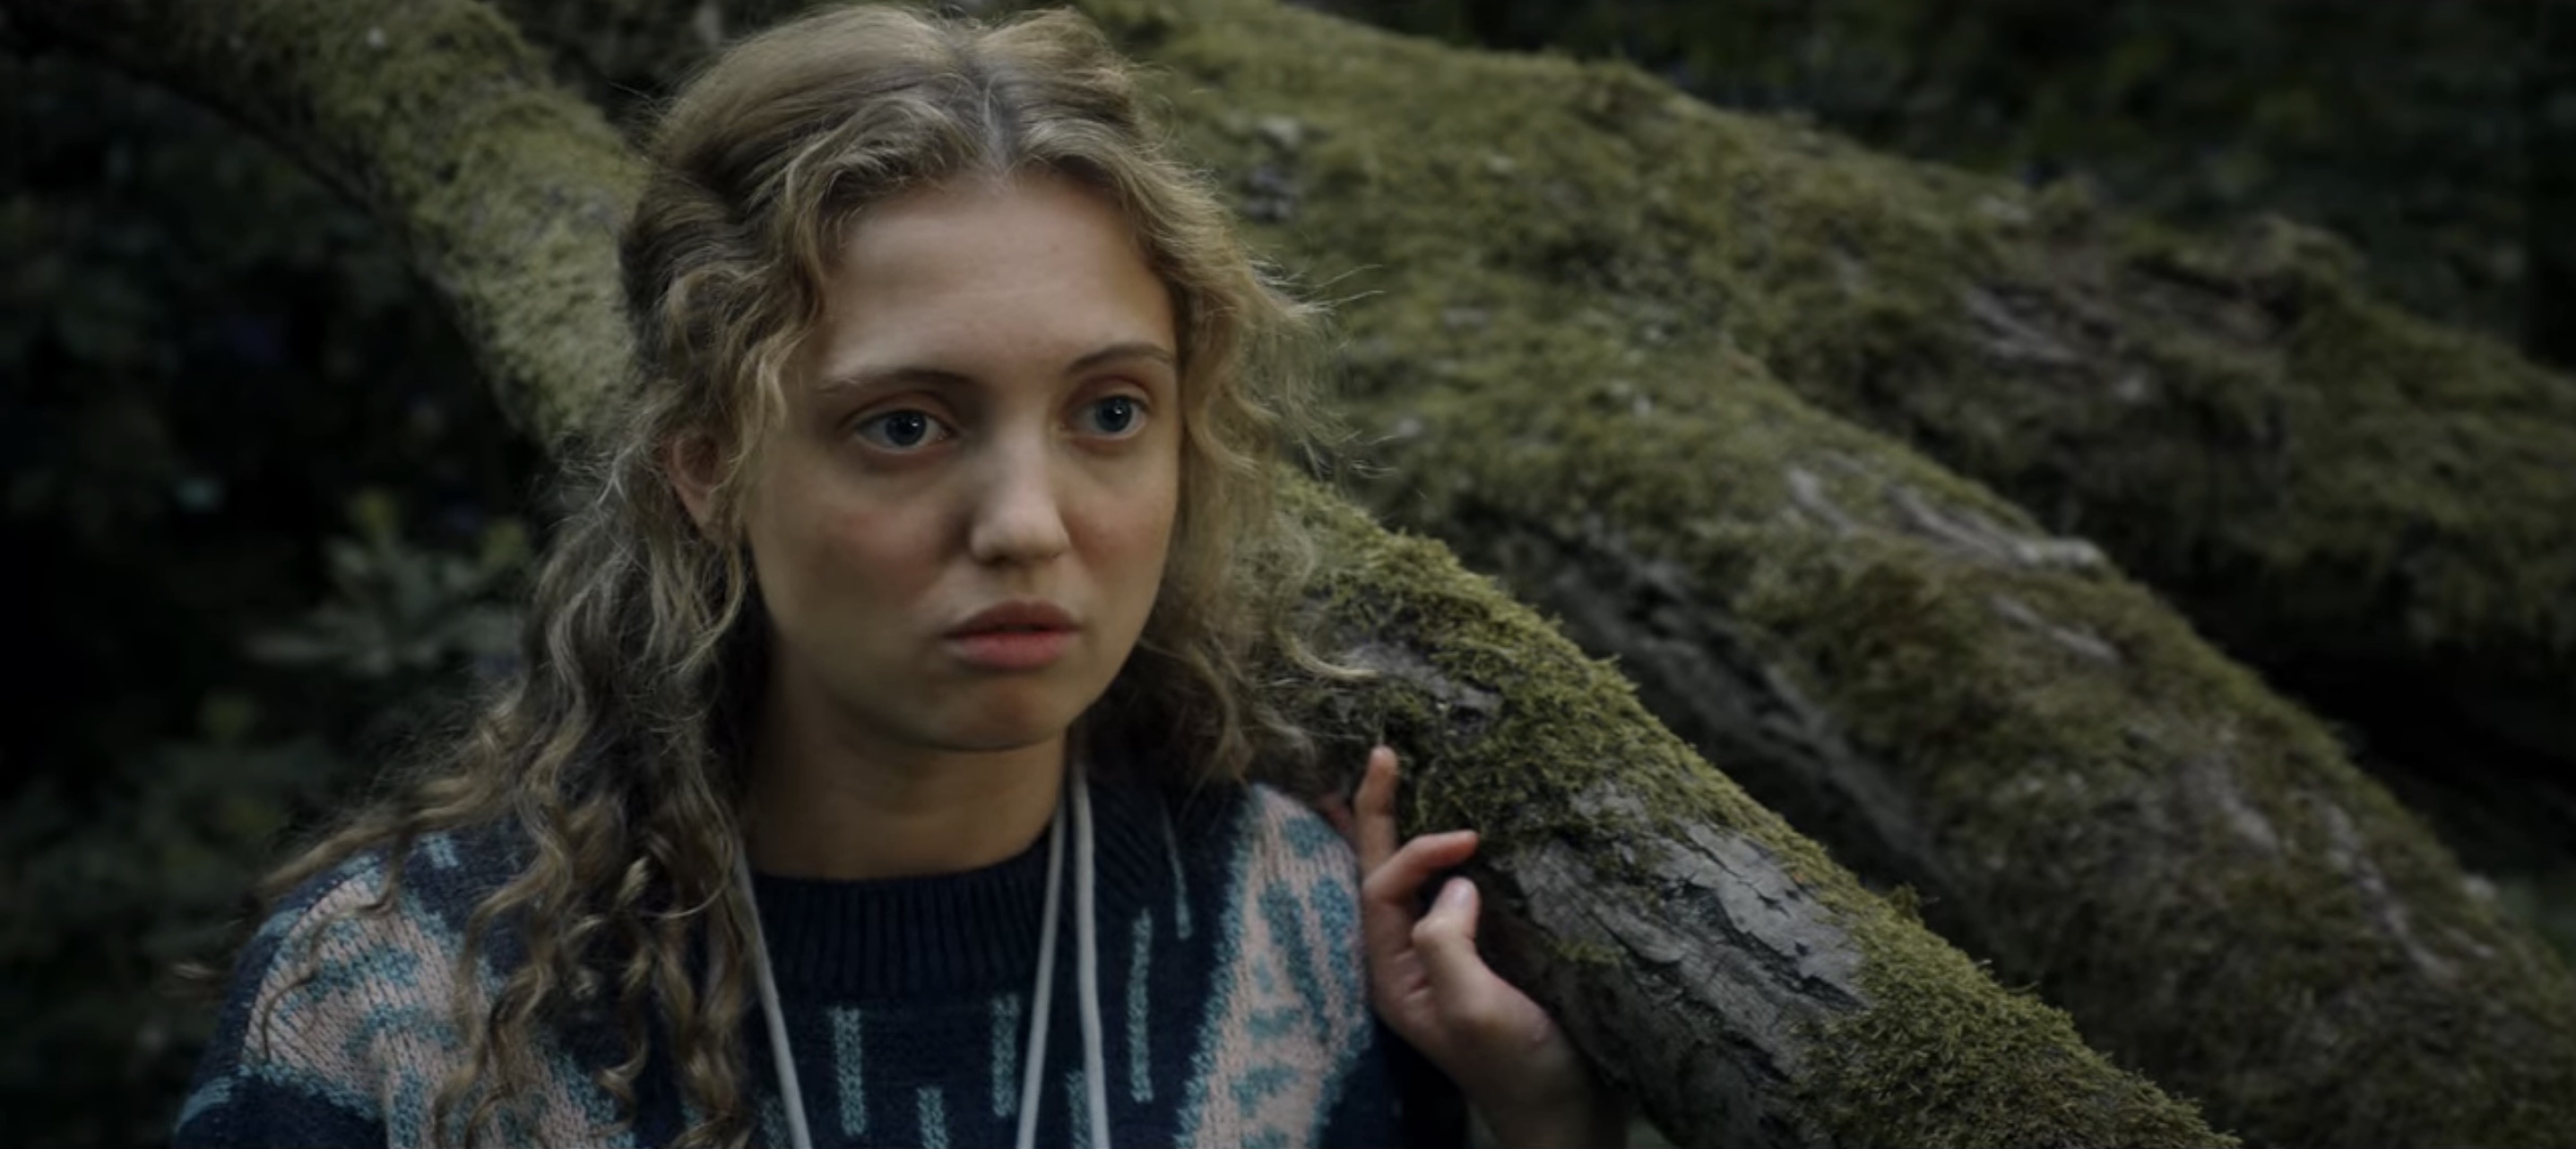 Red Rose Cast on Netflix - Amelia Clarkson as Wren Davies